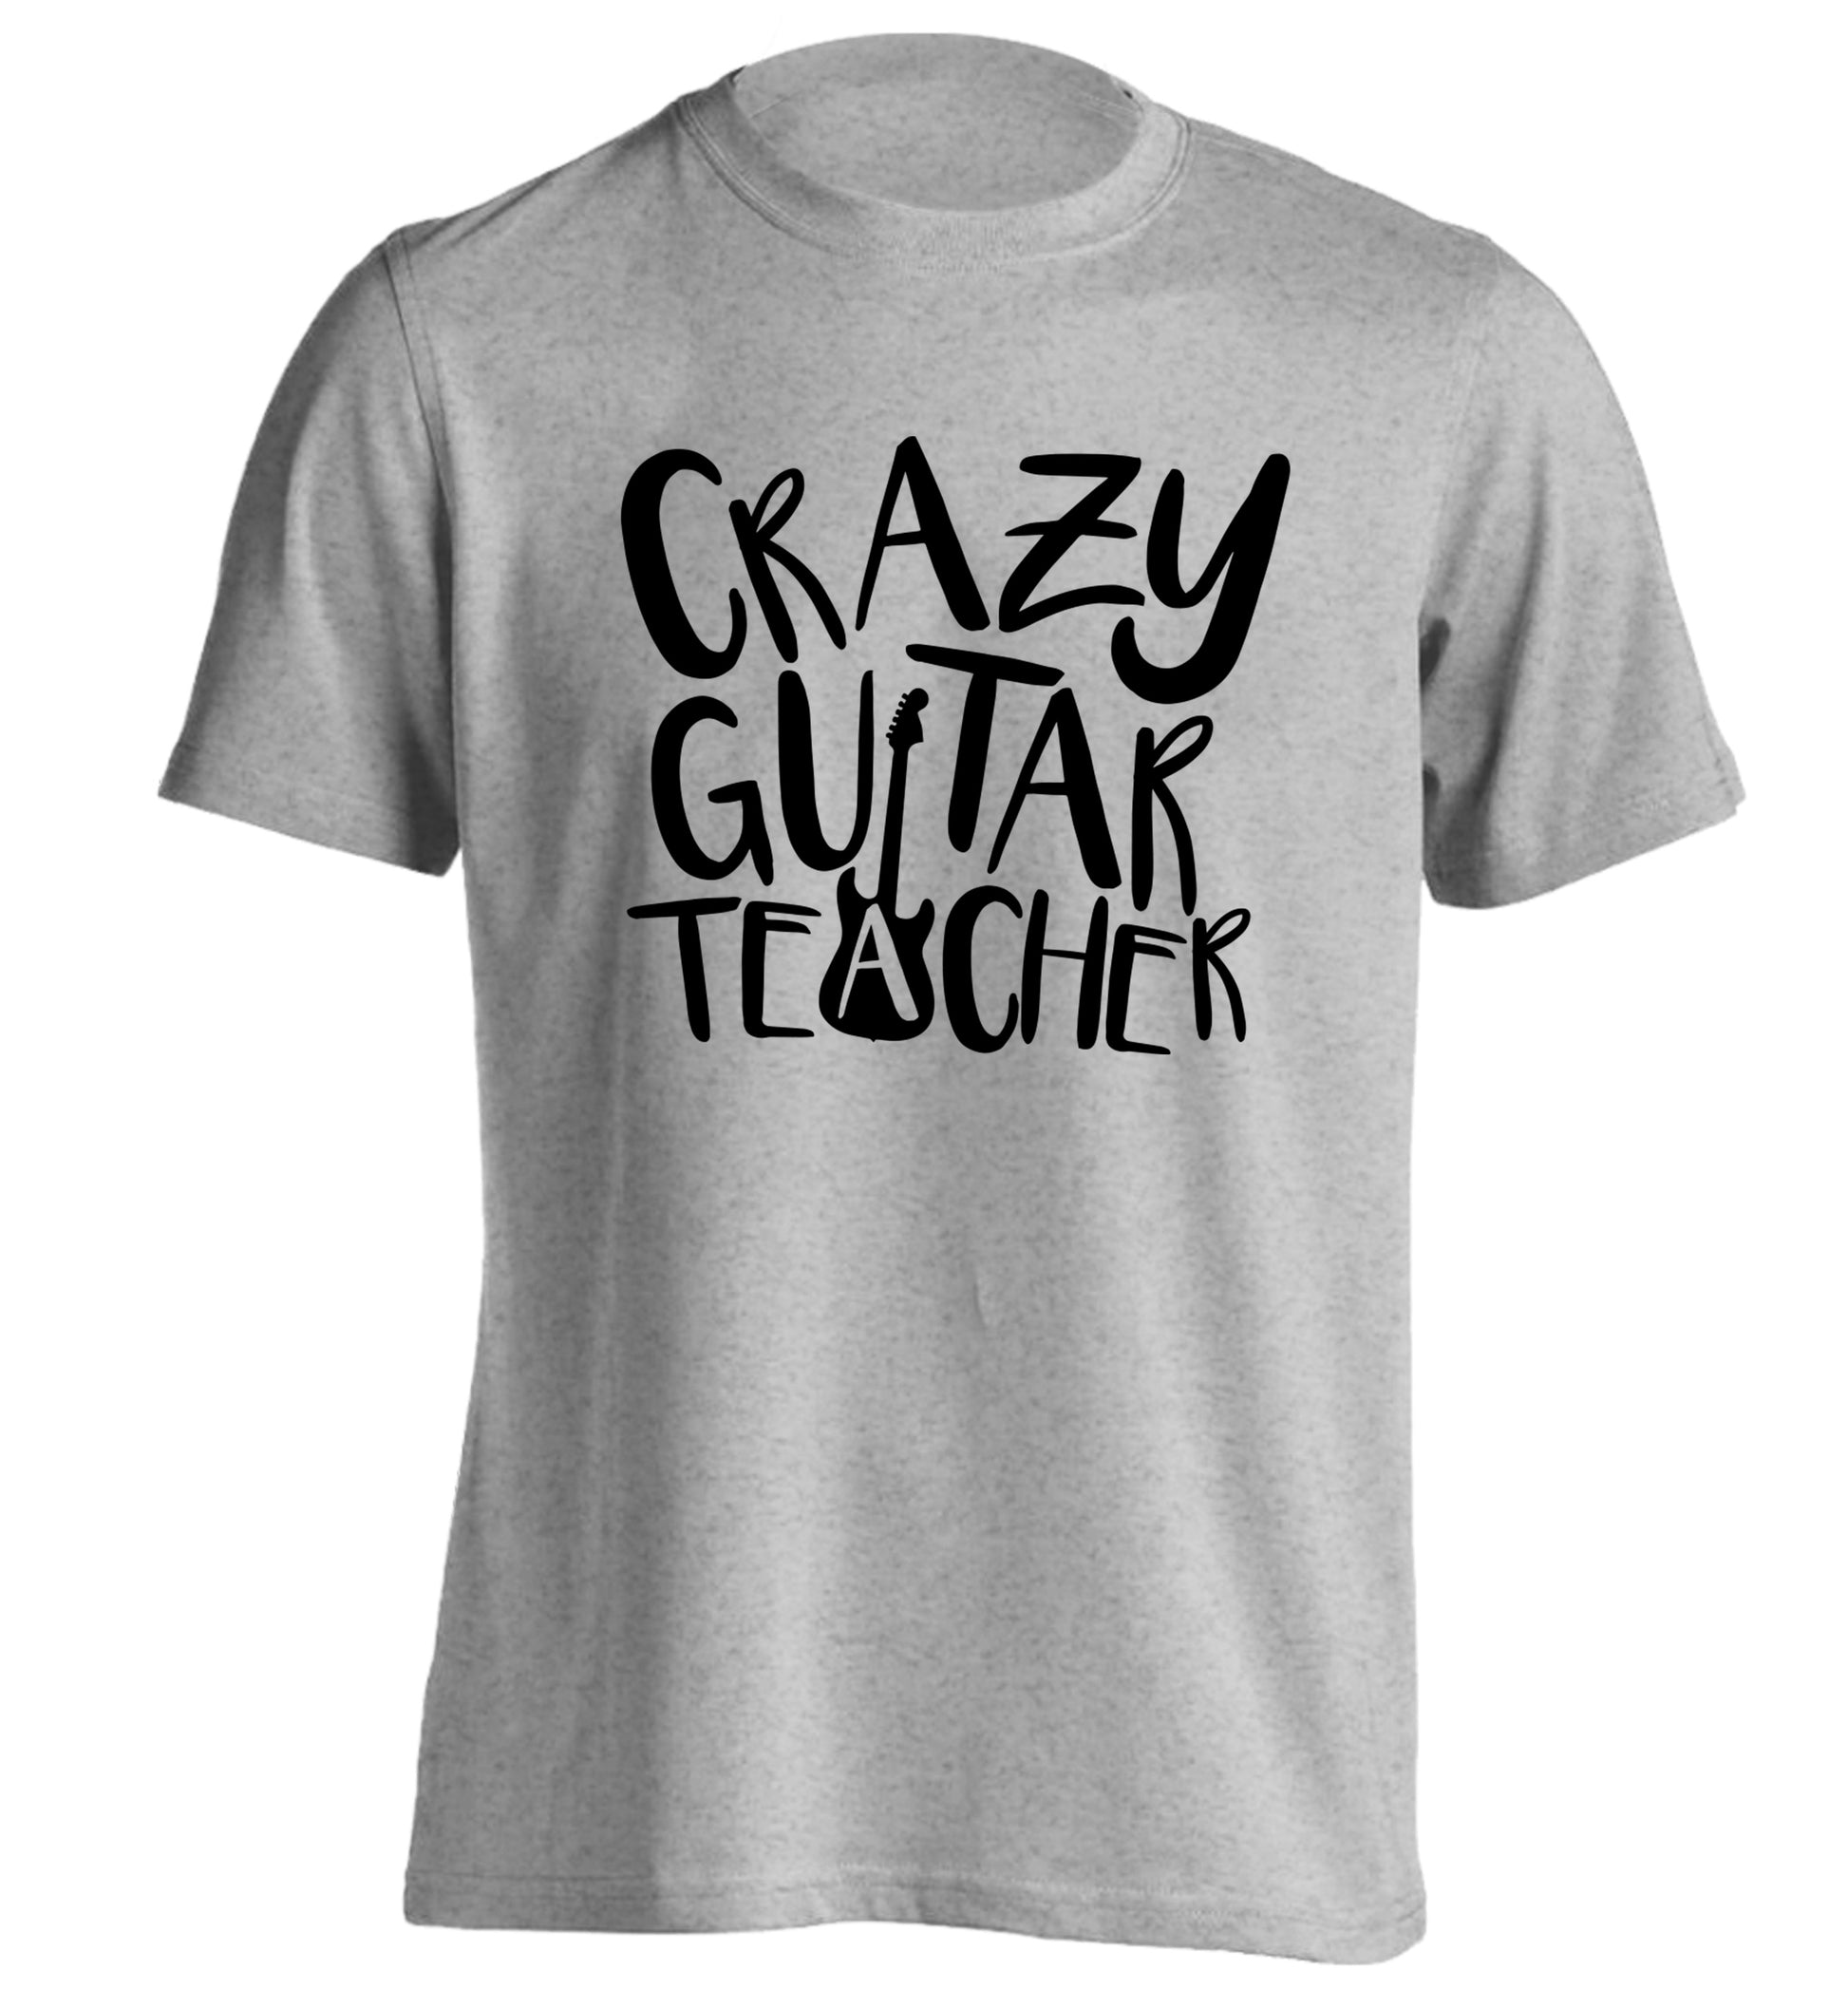 Crazy guitar teacher adults unisex grey Tshirt 2XL